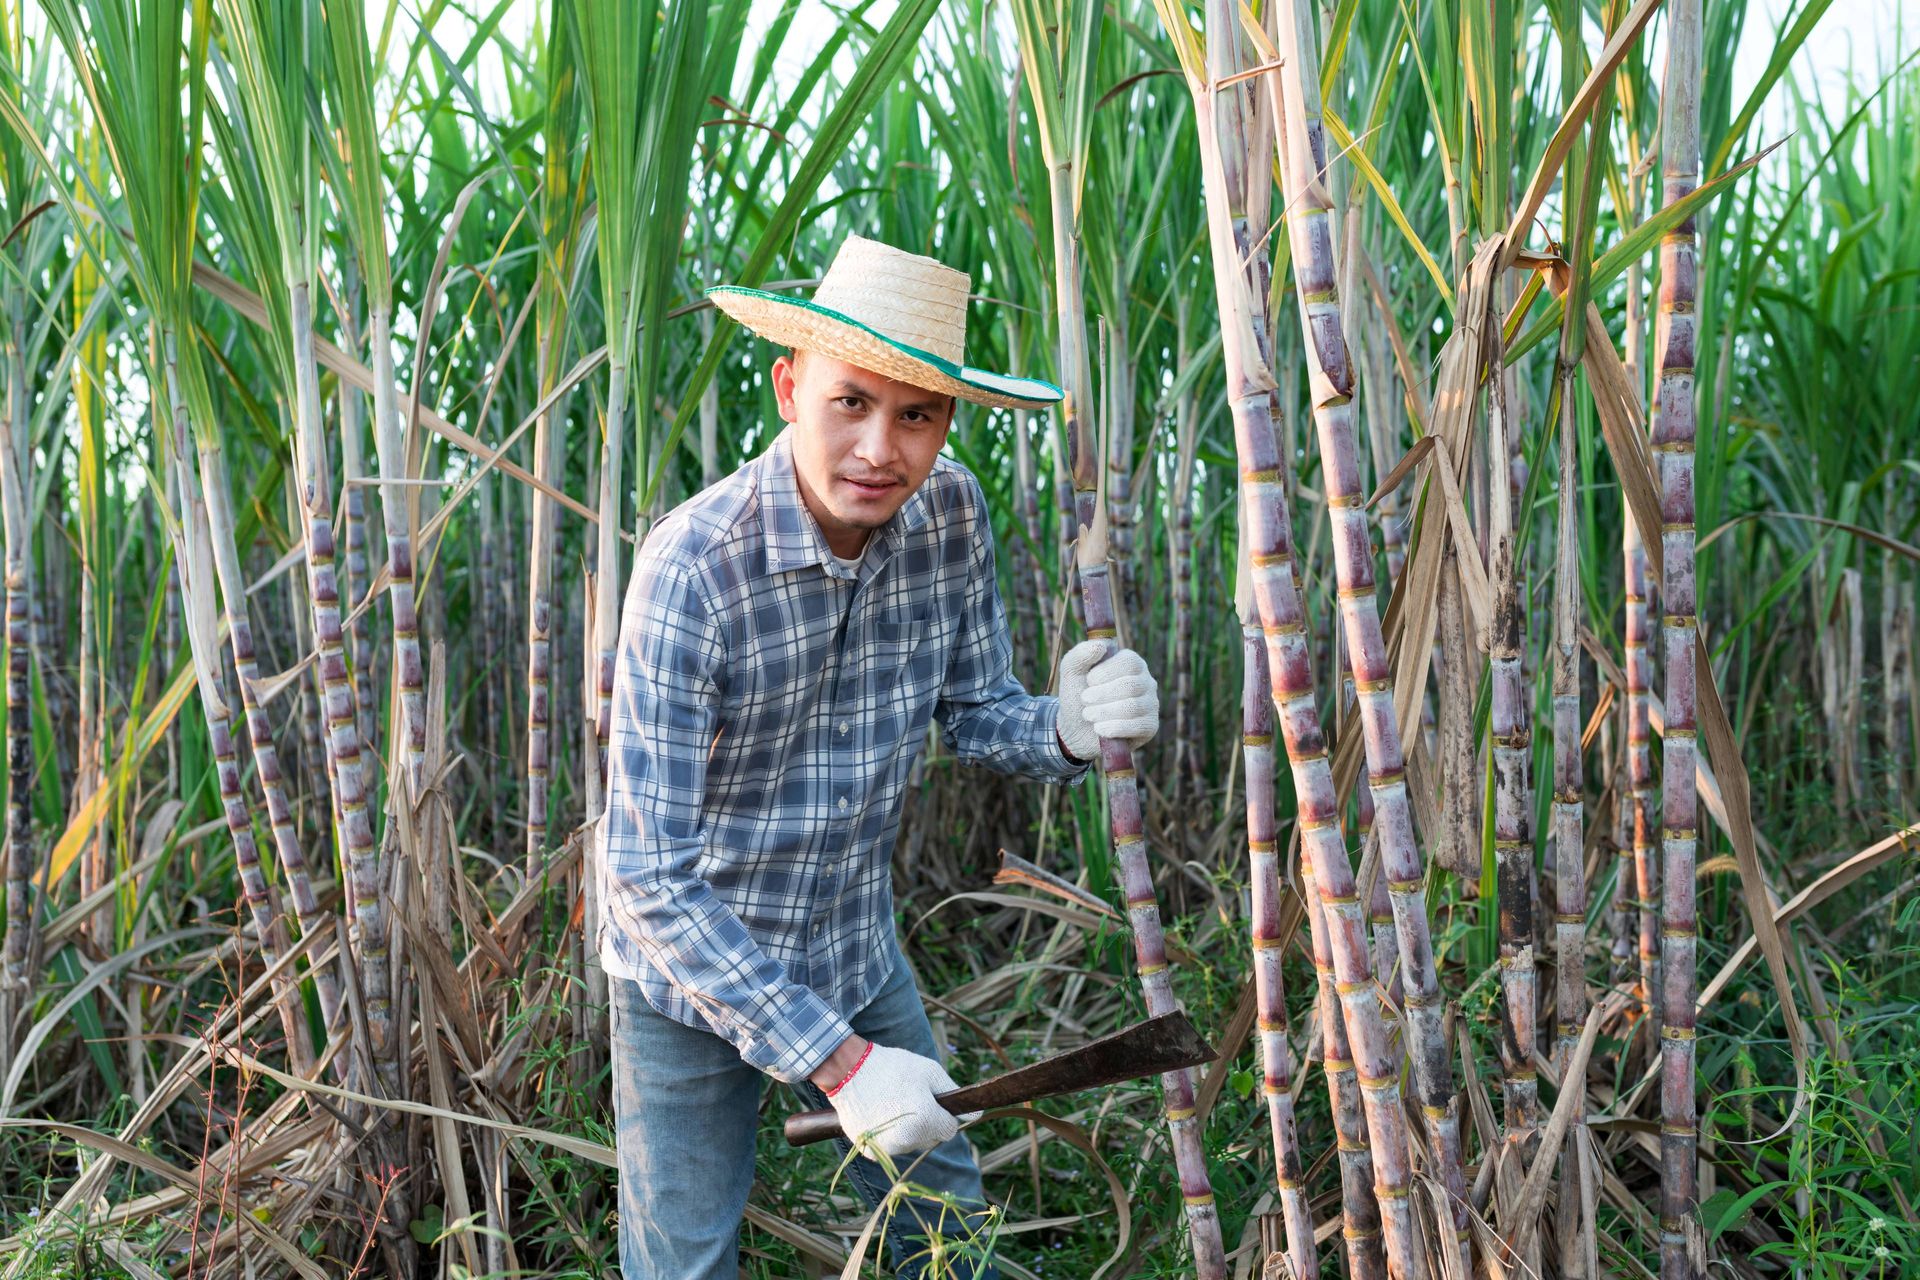 Image of a smallholder farmer harvesting sugarcane